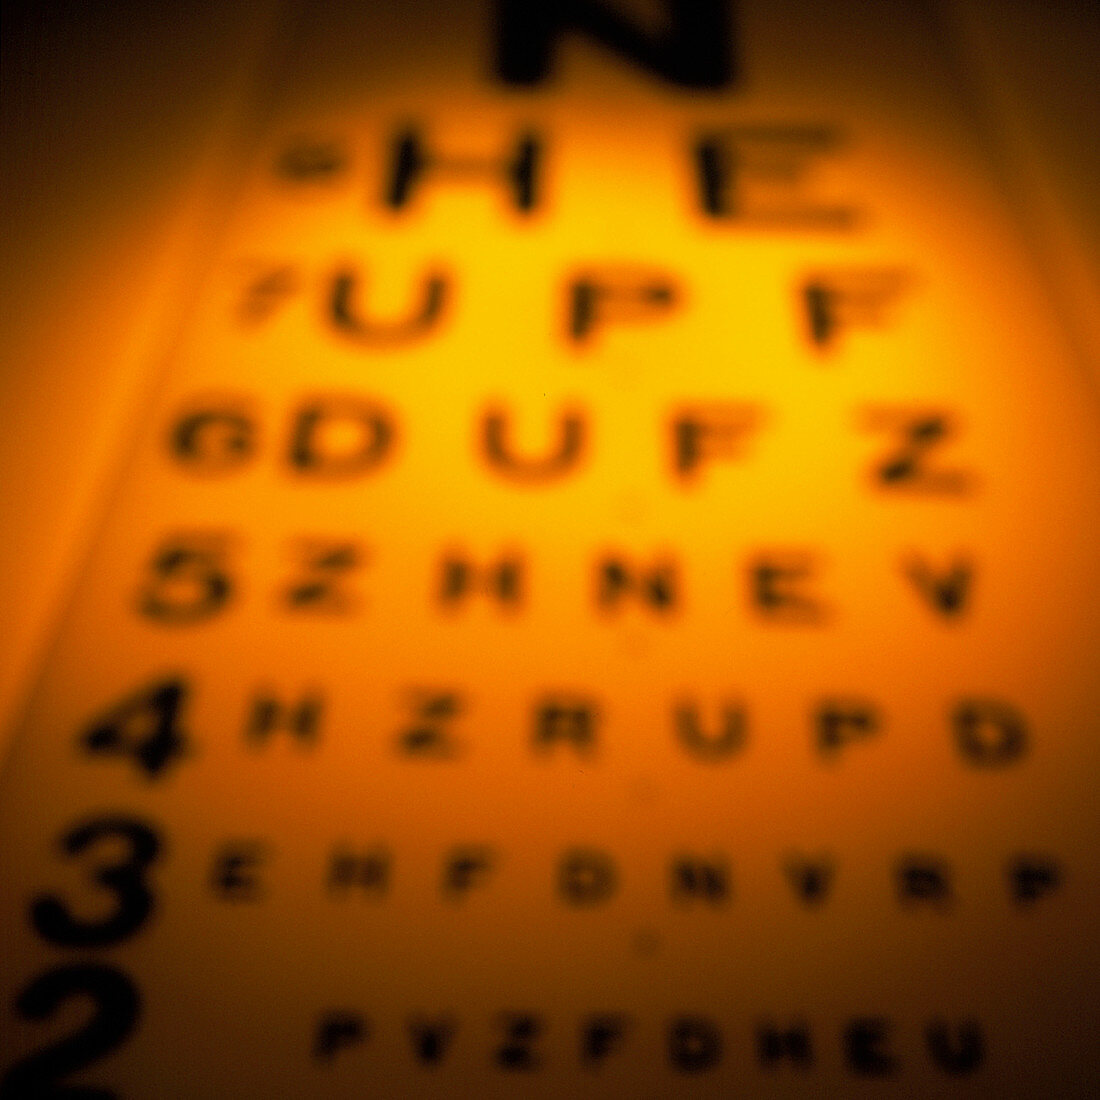 Blurred view of a Snellen eye test chart